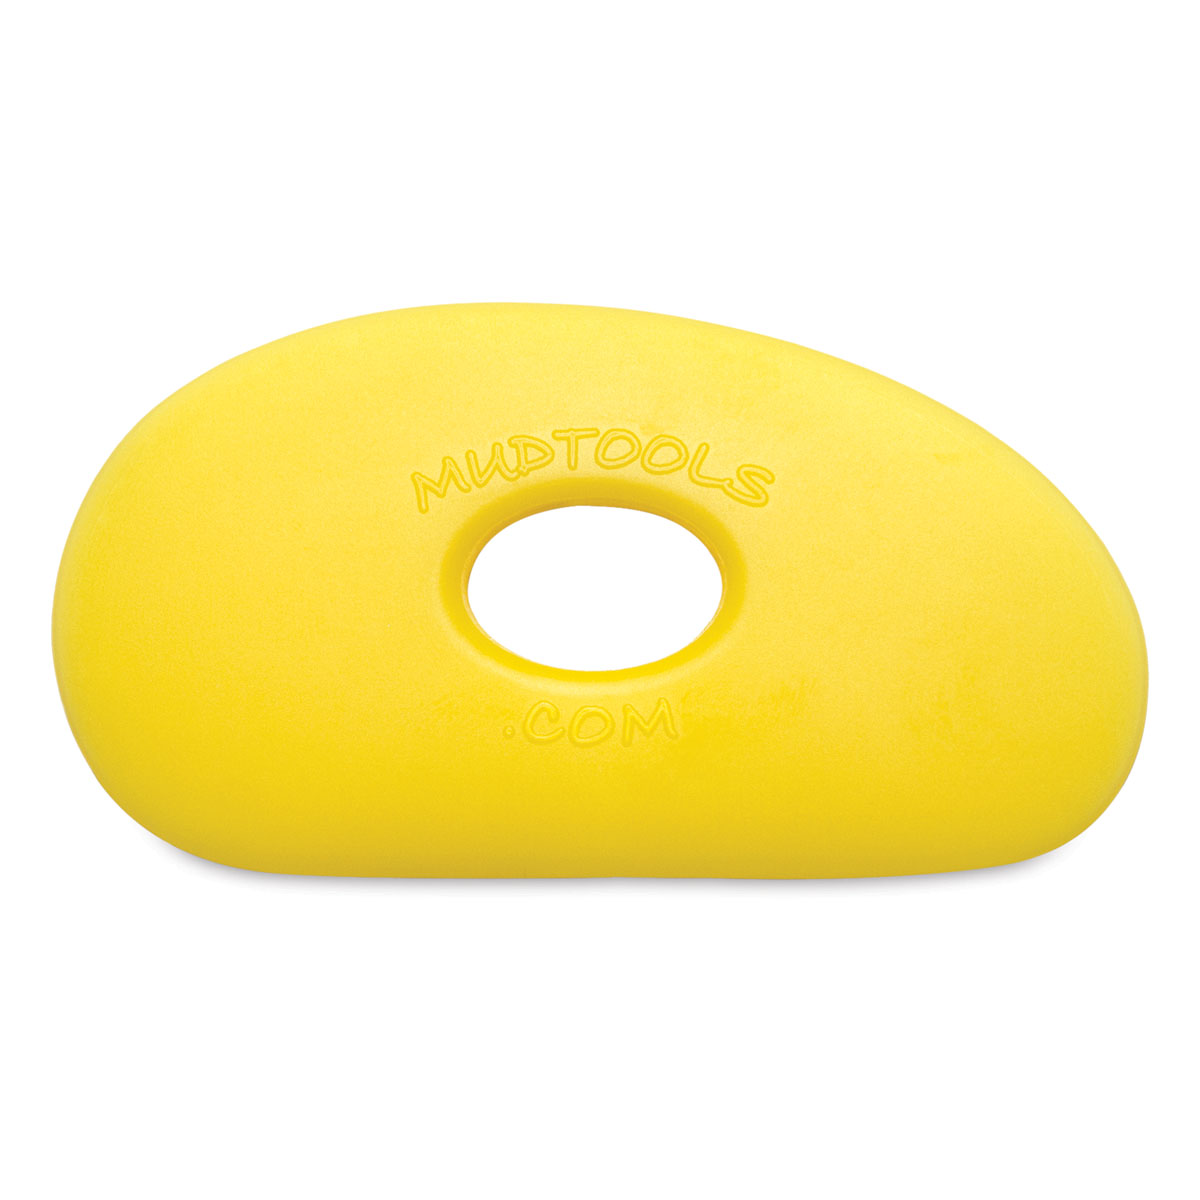 Mudtools Polymer Bowl Rib - Small, Yellow